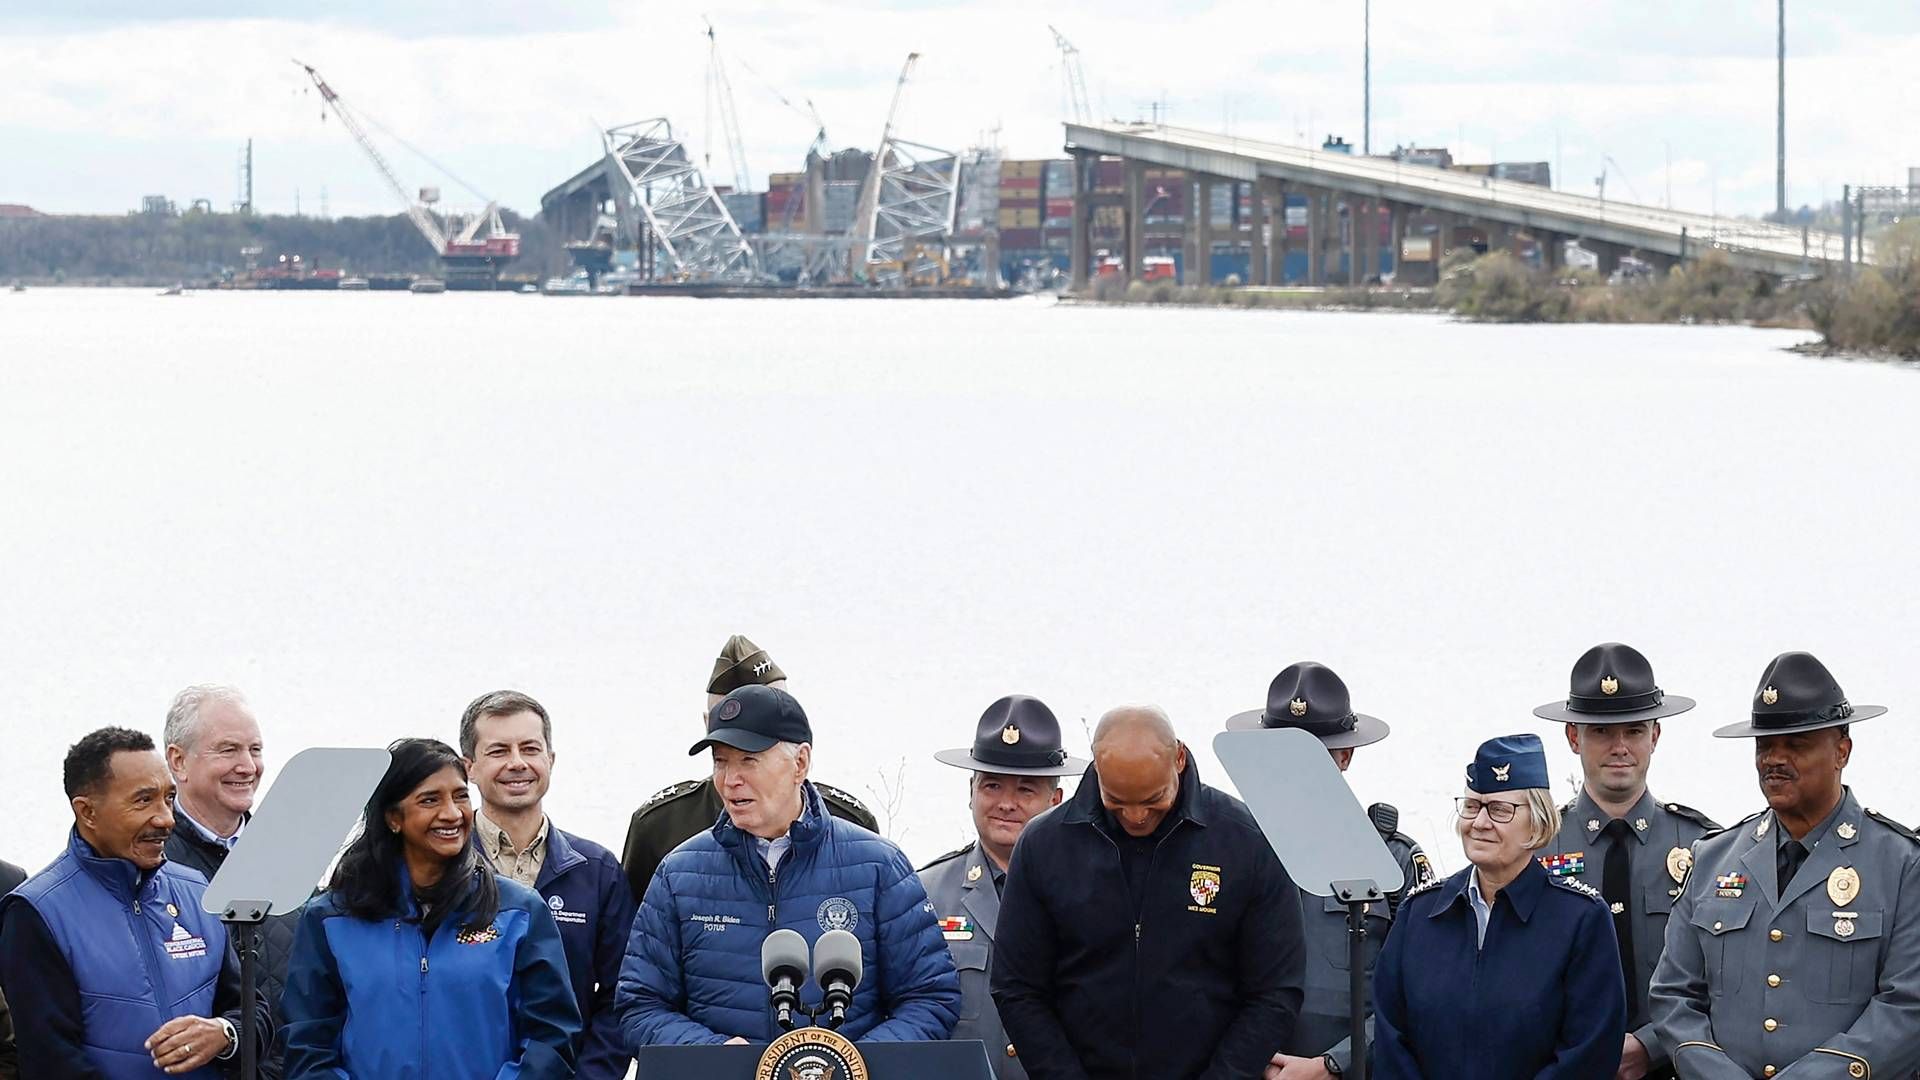 Joe Biden visited Baltimore on Friday to survey the damage and speak with local officials. | Photo: Anna Moneymaker/AFP/Ritzau Scanpix